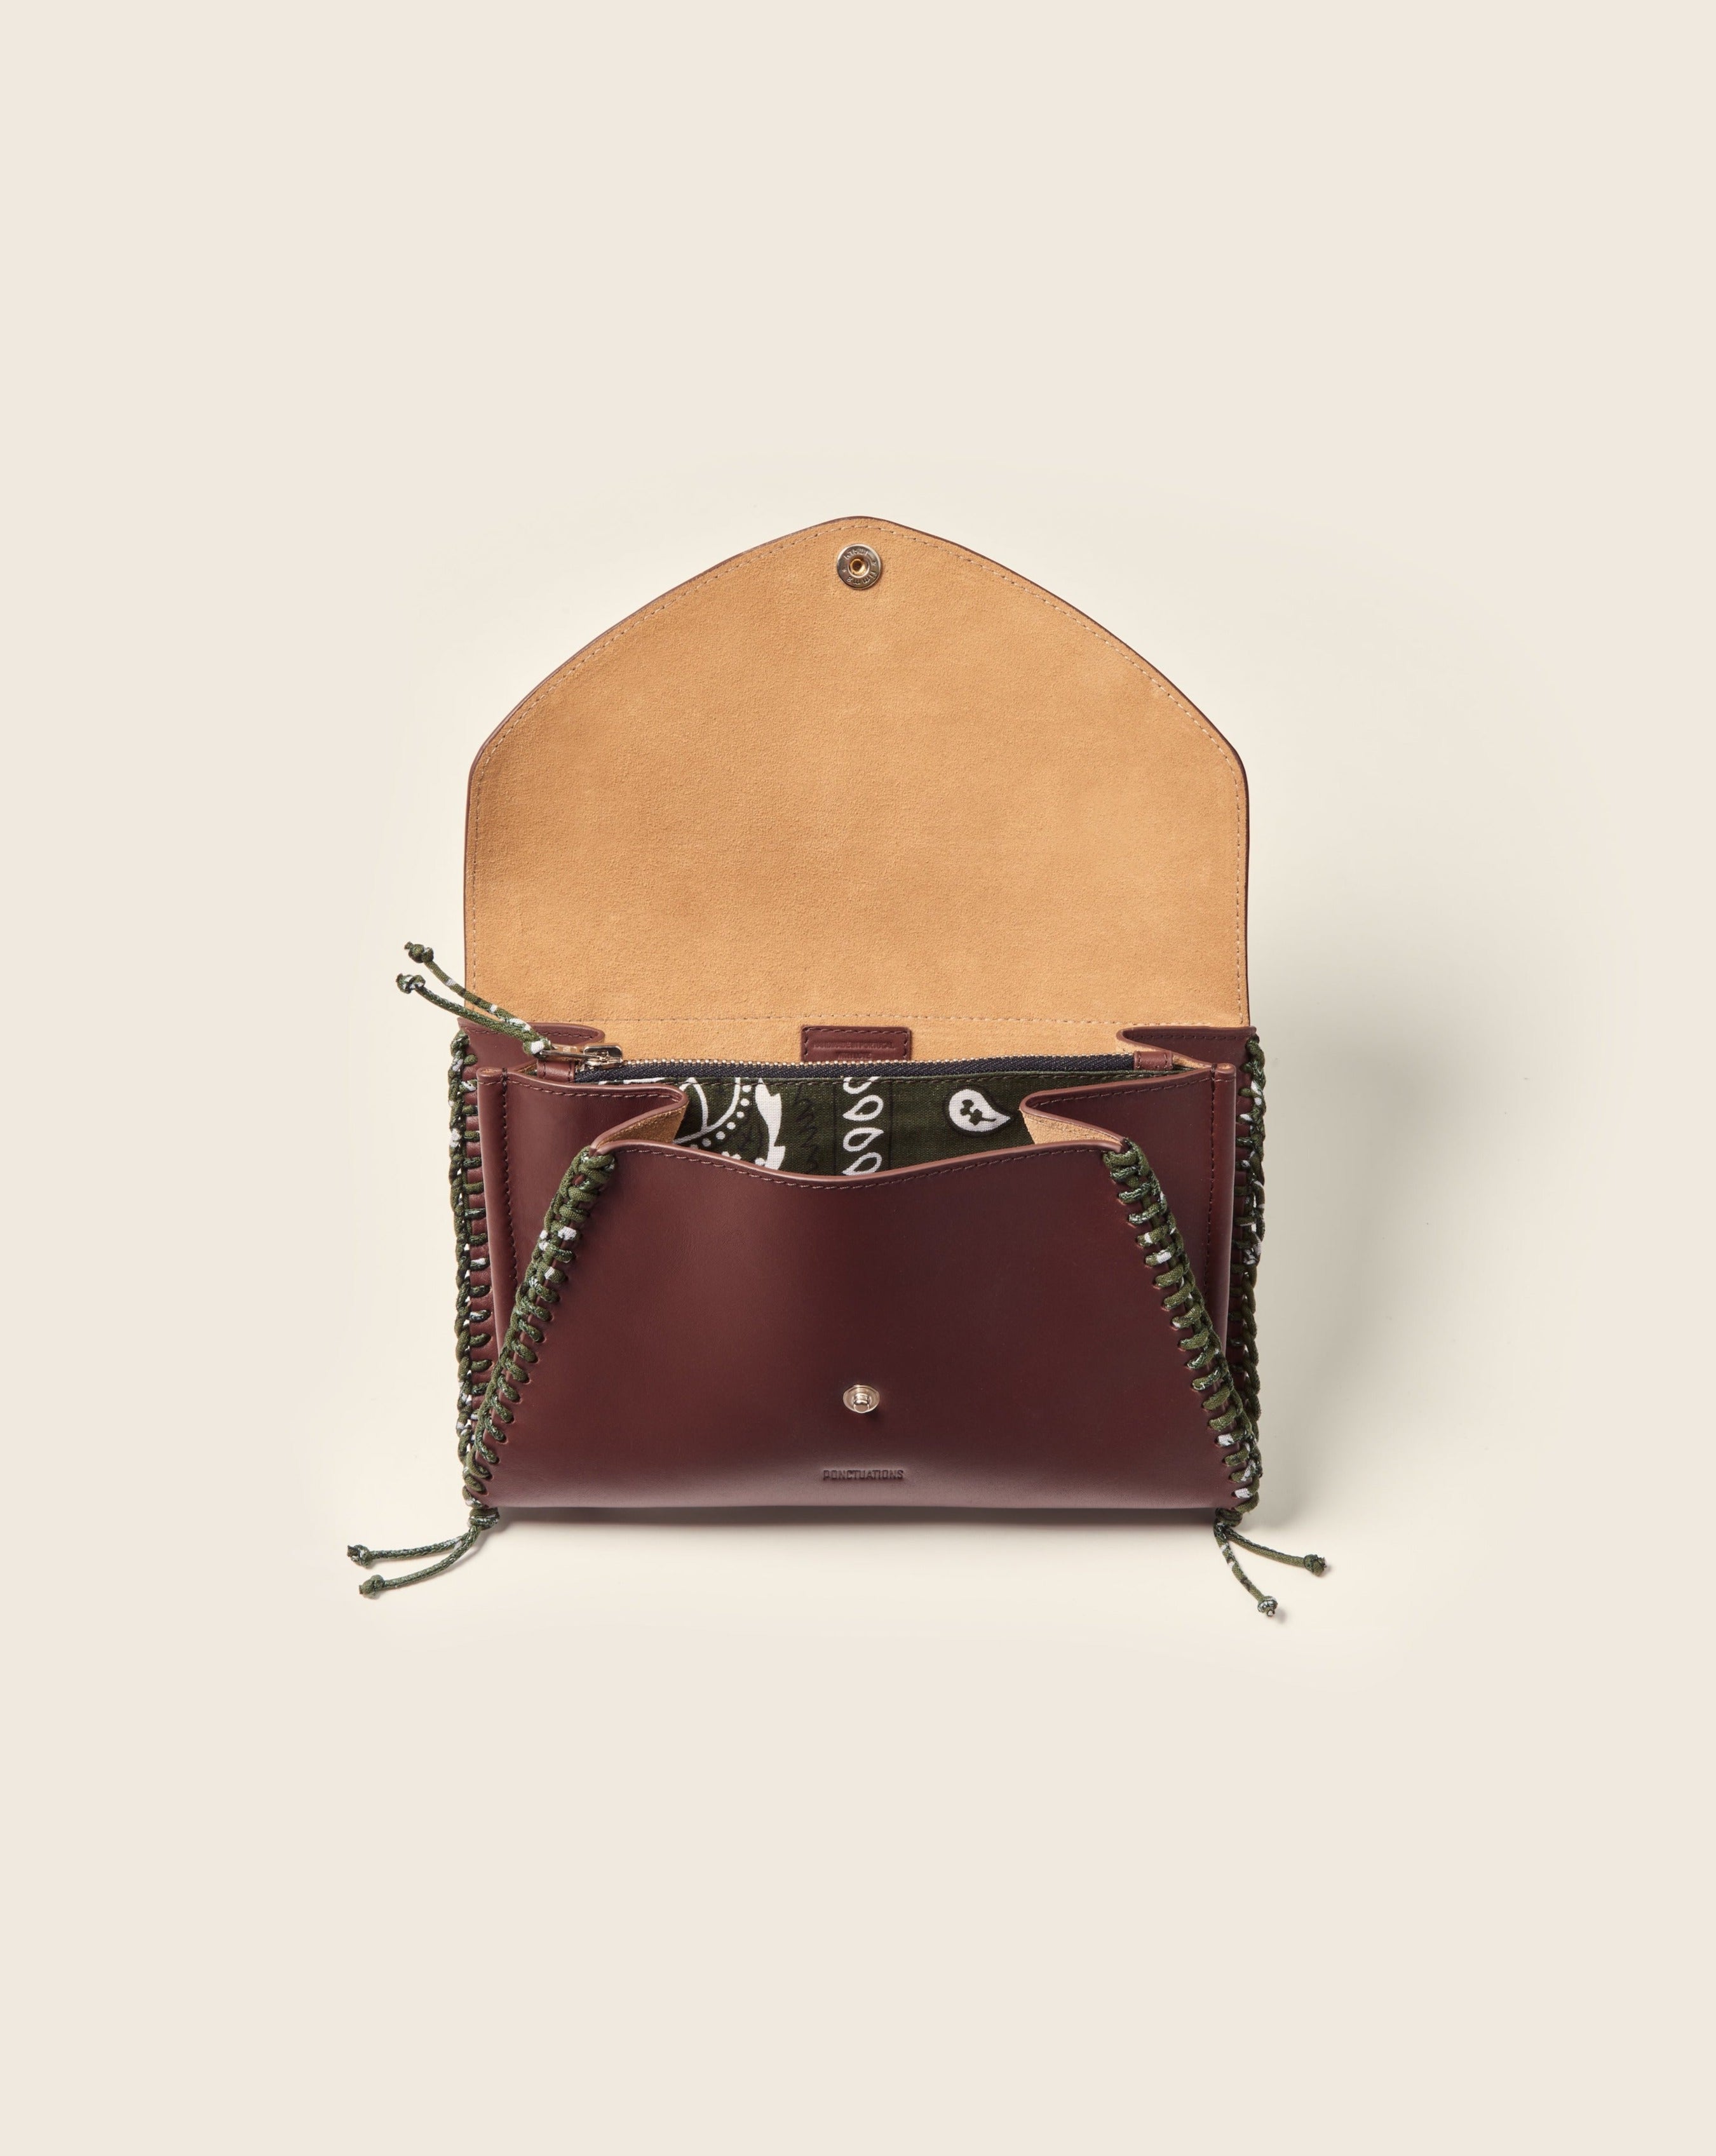 BATU - Envelope bag - Brown leather & Bandana green